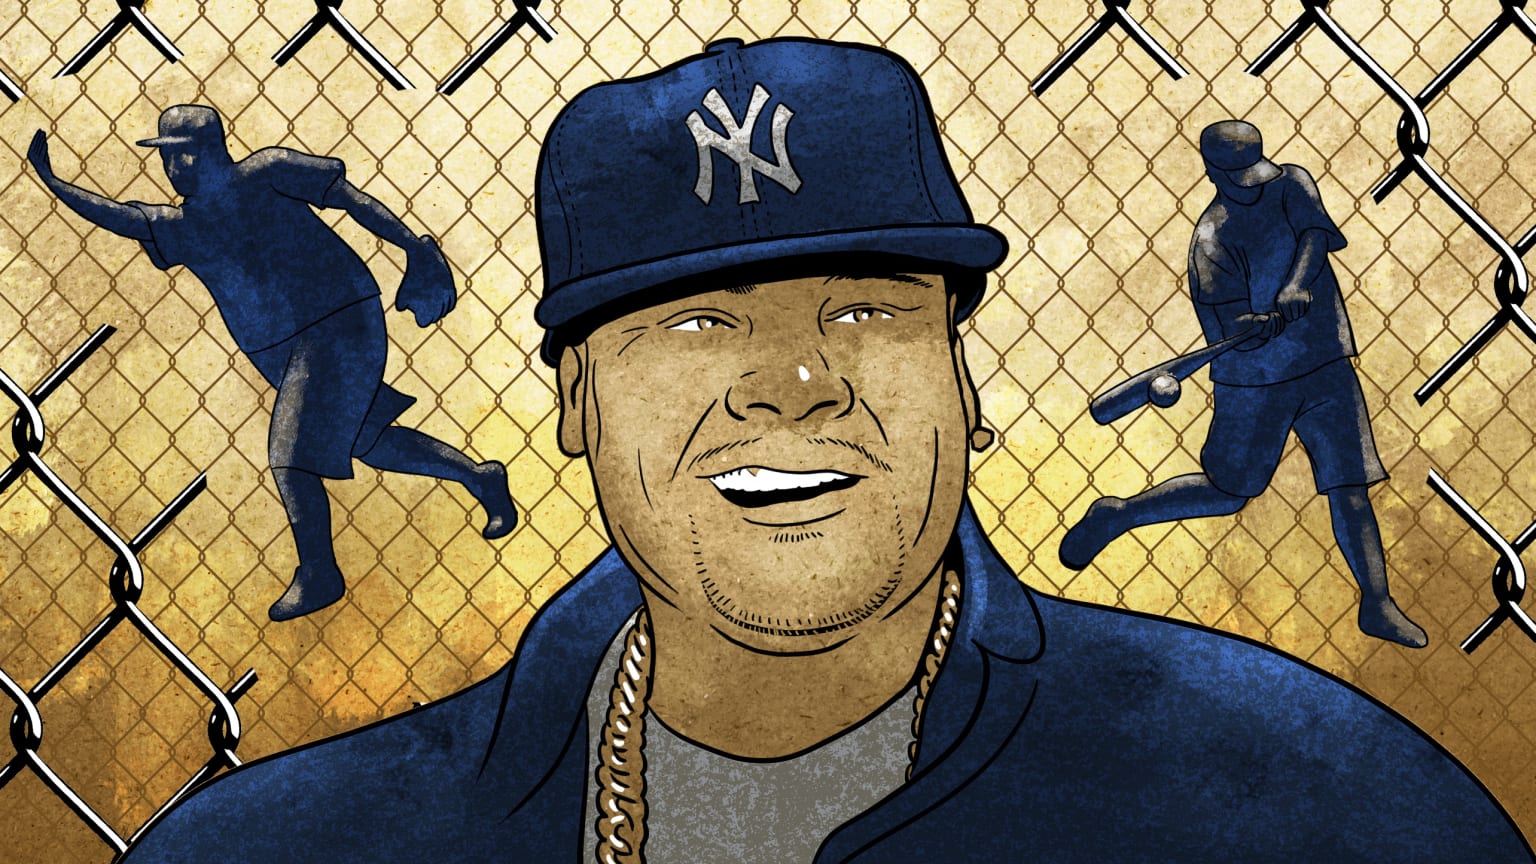 An illustration of rapper Fat Joe in a Yankees cap